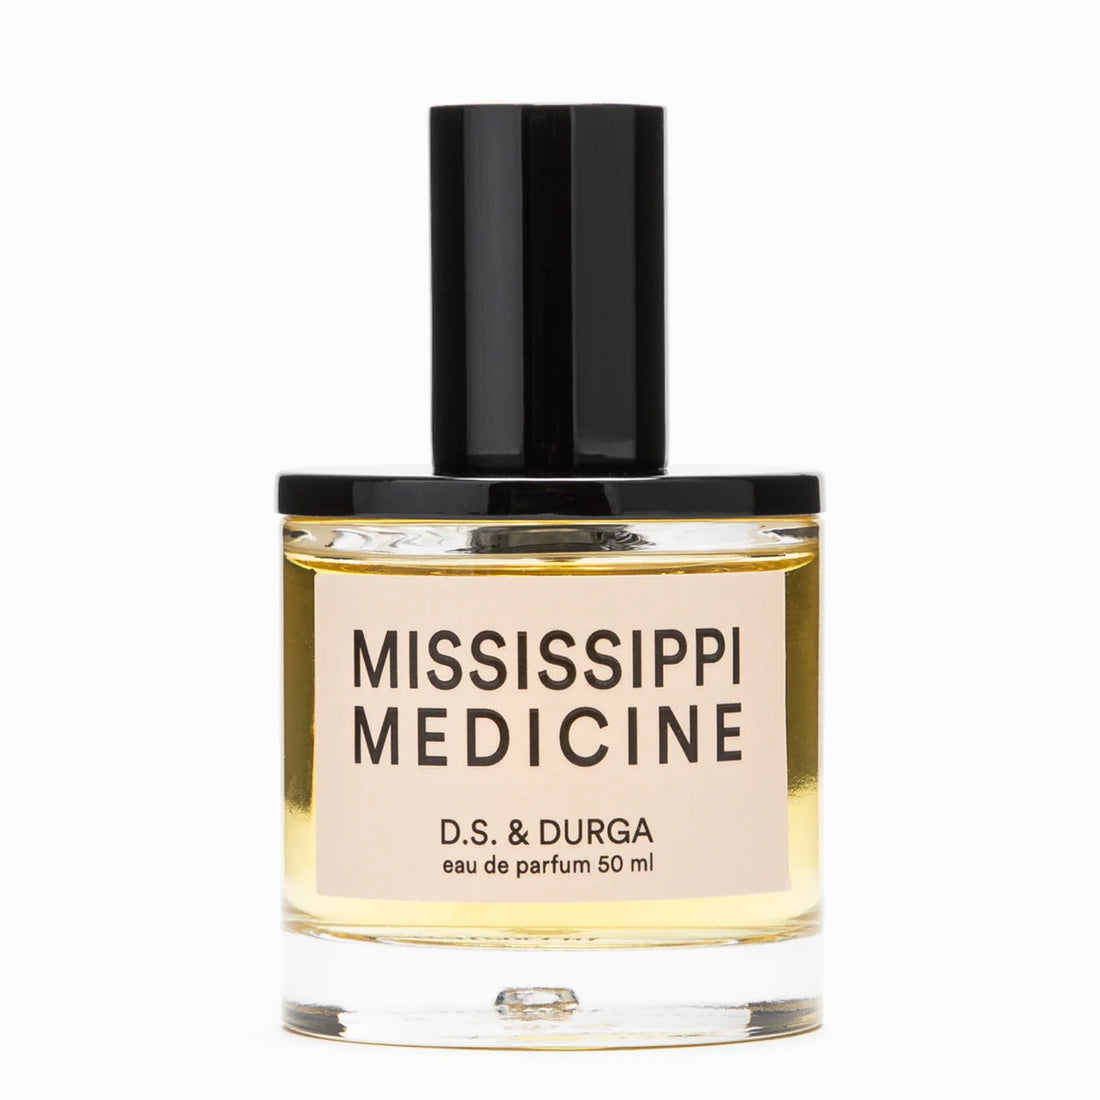 Mississipi Medicine Eau de parfum - 50 ml